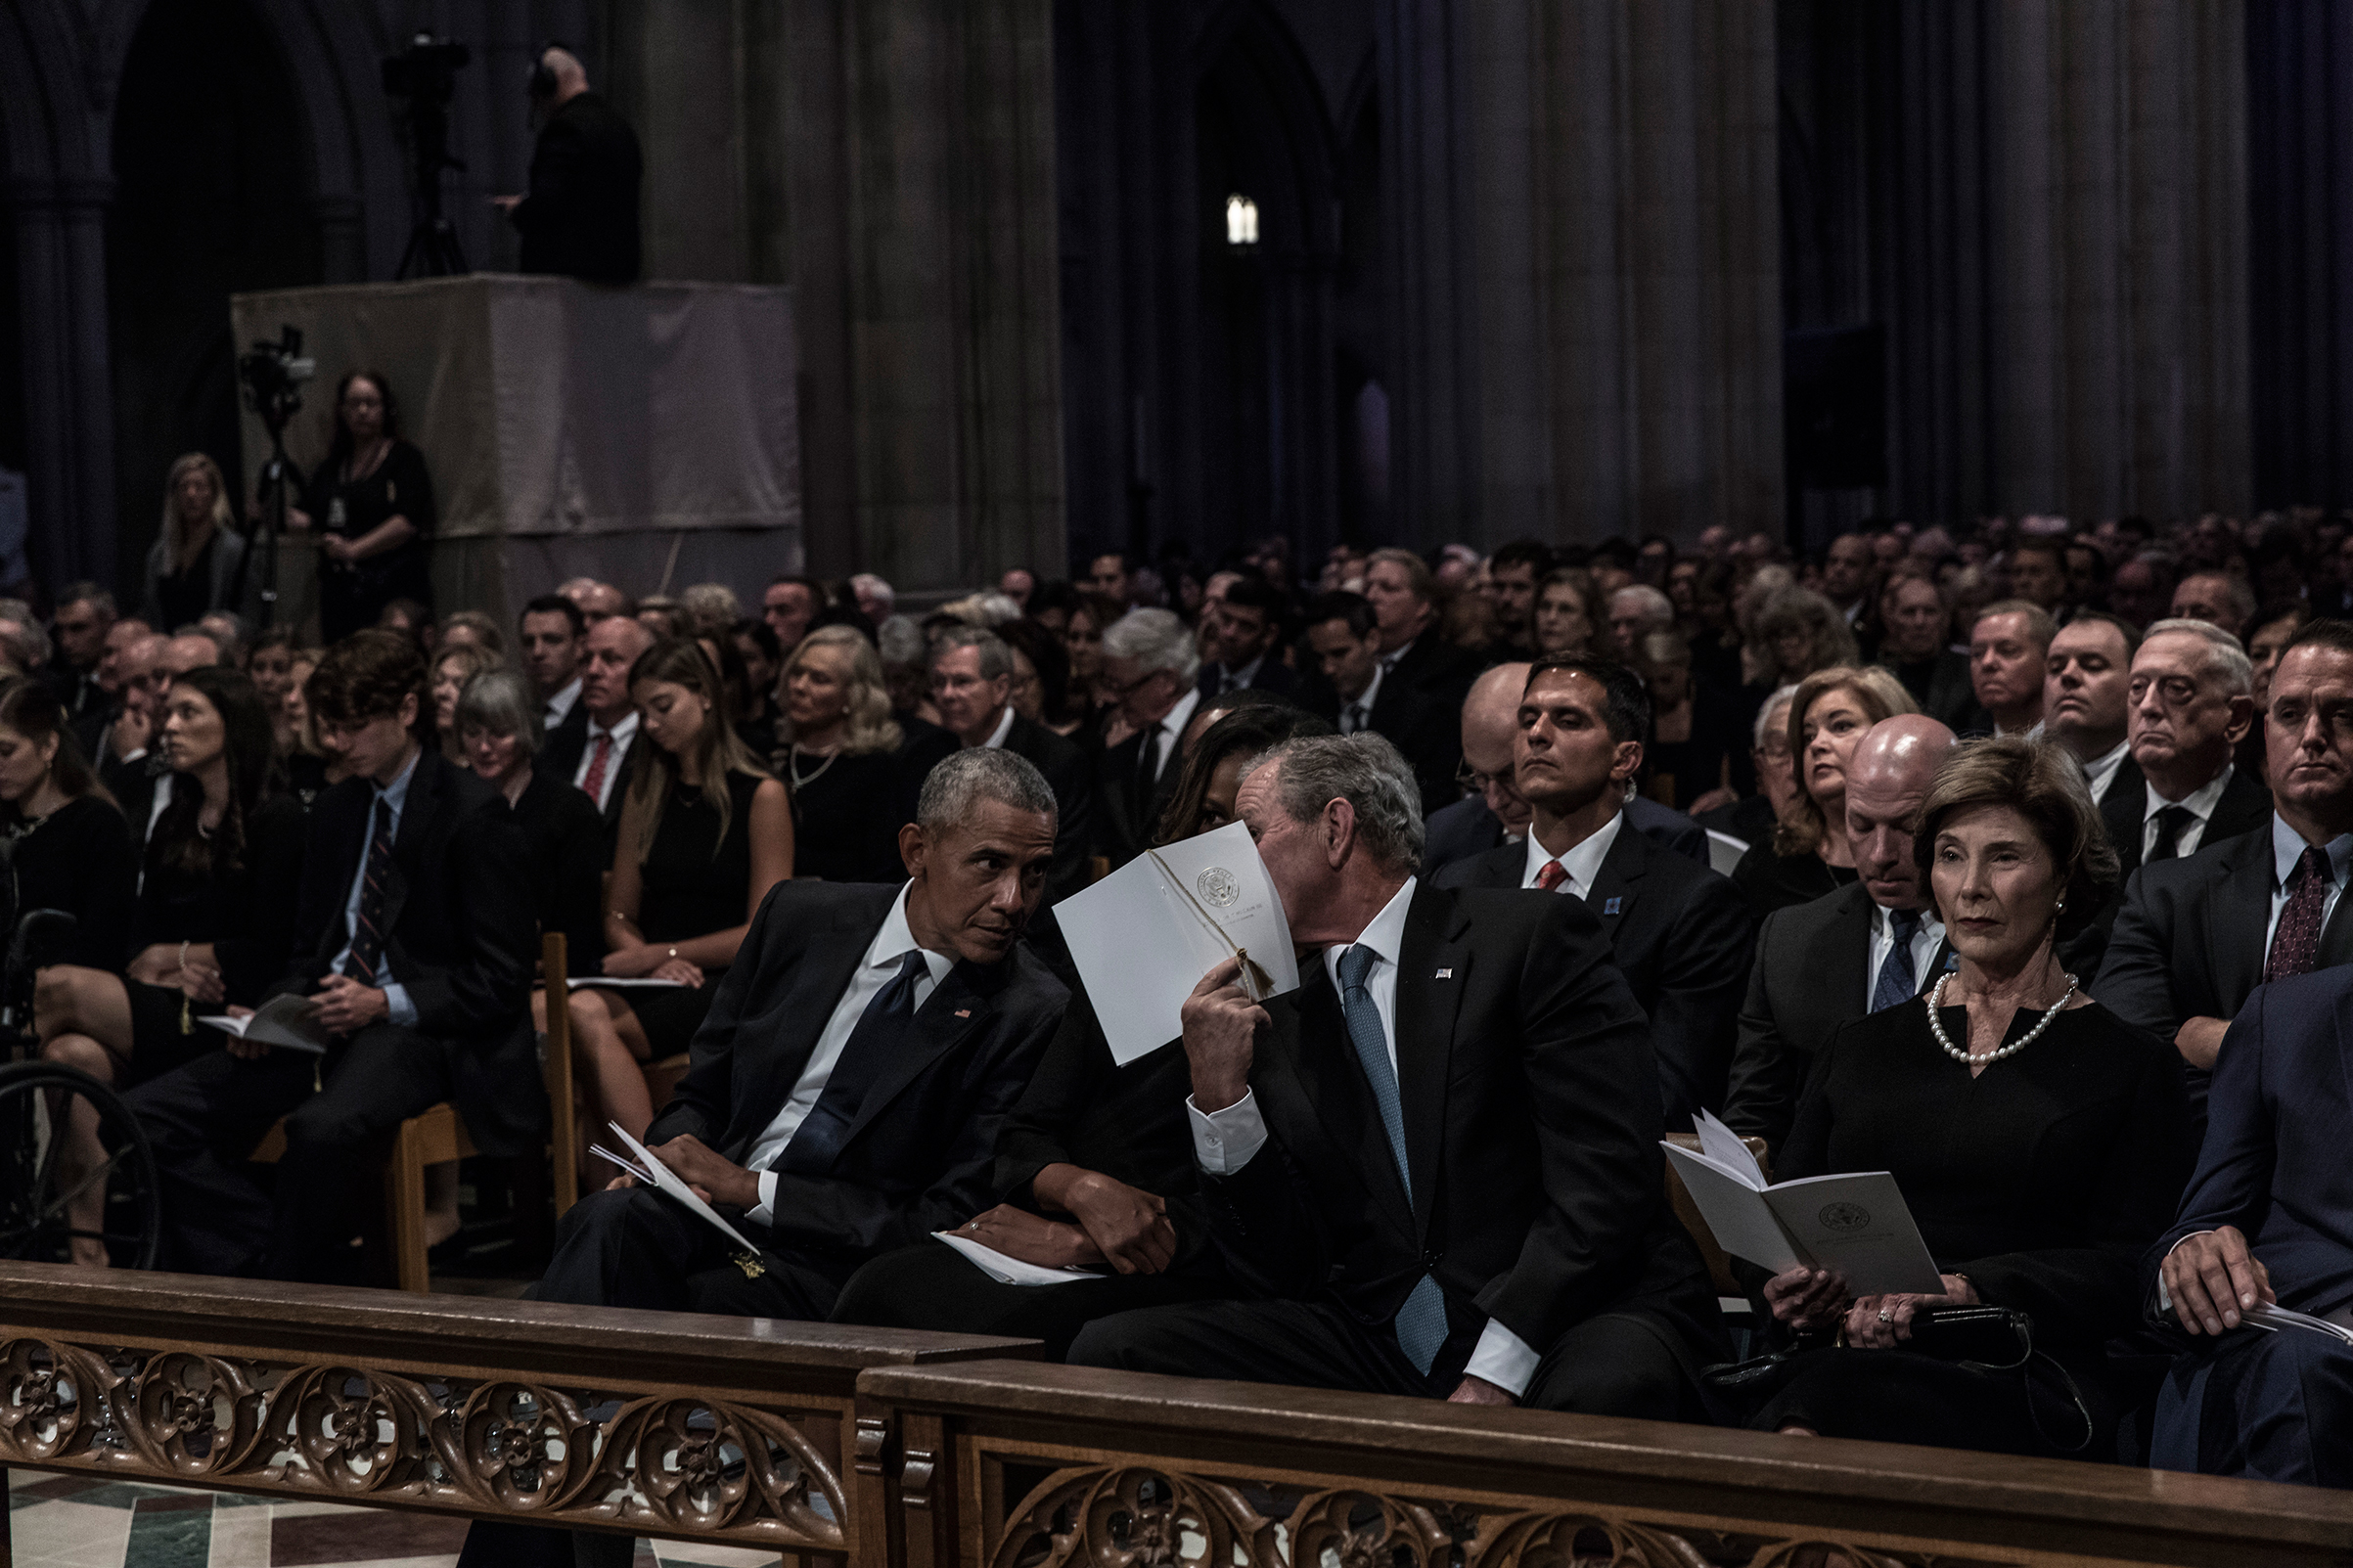 Former US President Barack Obama, Michelle Obama, former President George W. Bush and Laura Bush during a memorial service for Senator John McCain at the Washington National Cathedral on September 1, 2018. (Christopher Morris—VII for TIME)